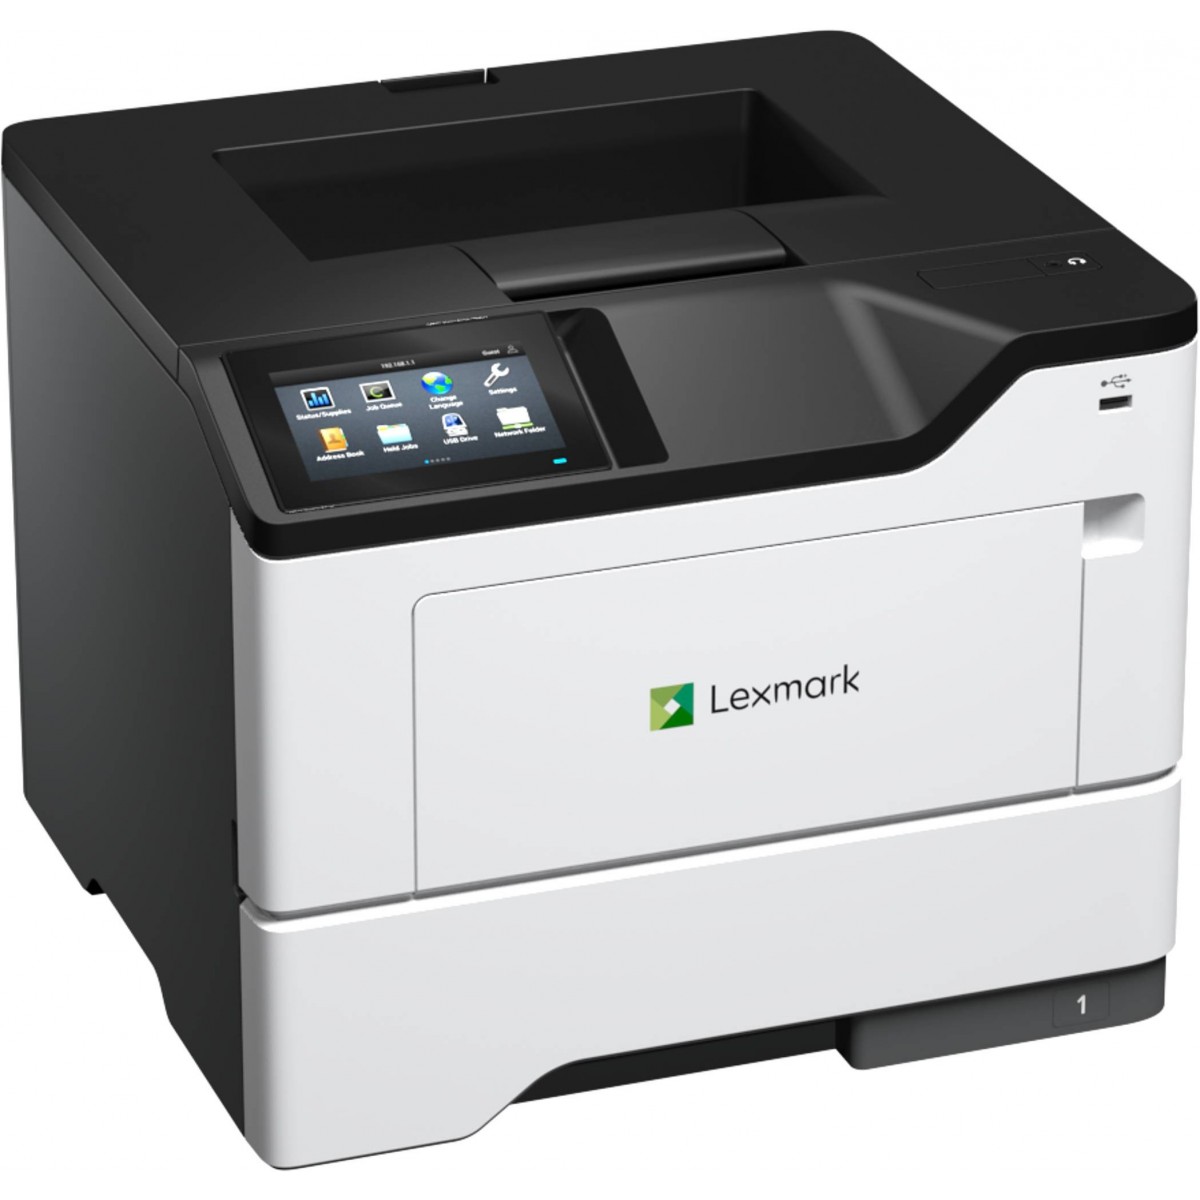 Lexmark M3350 Monochrome Singlefunction Printer HV EMEA 47ppm - Printer